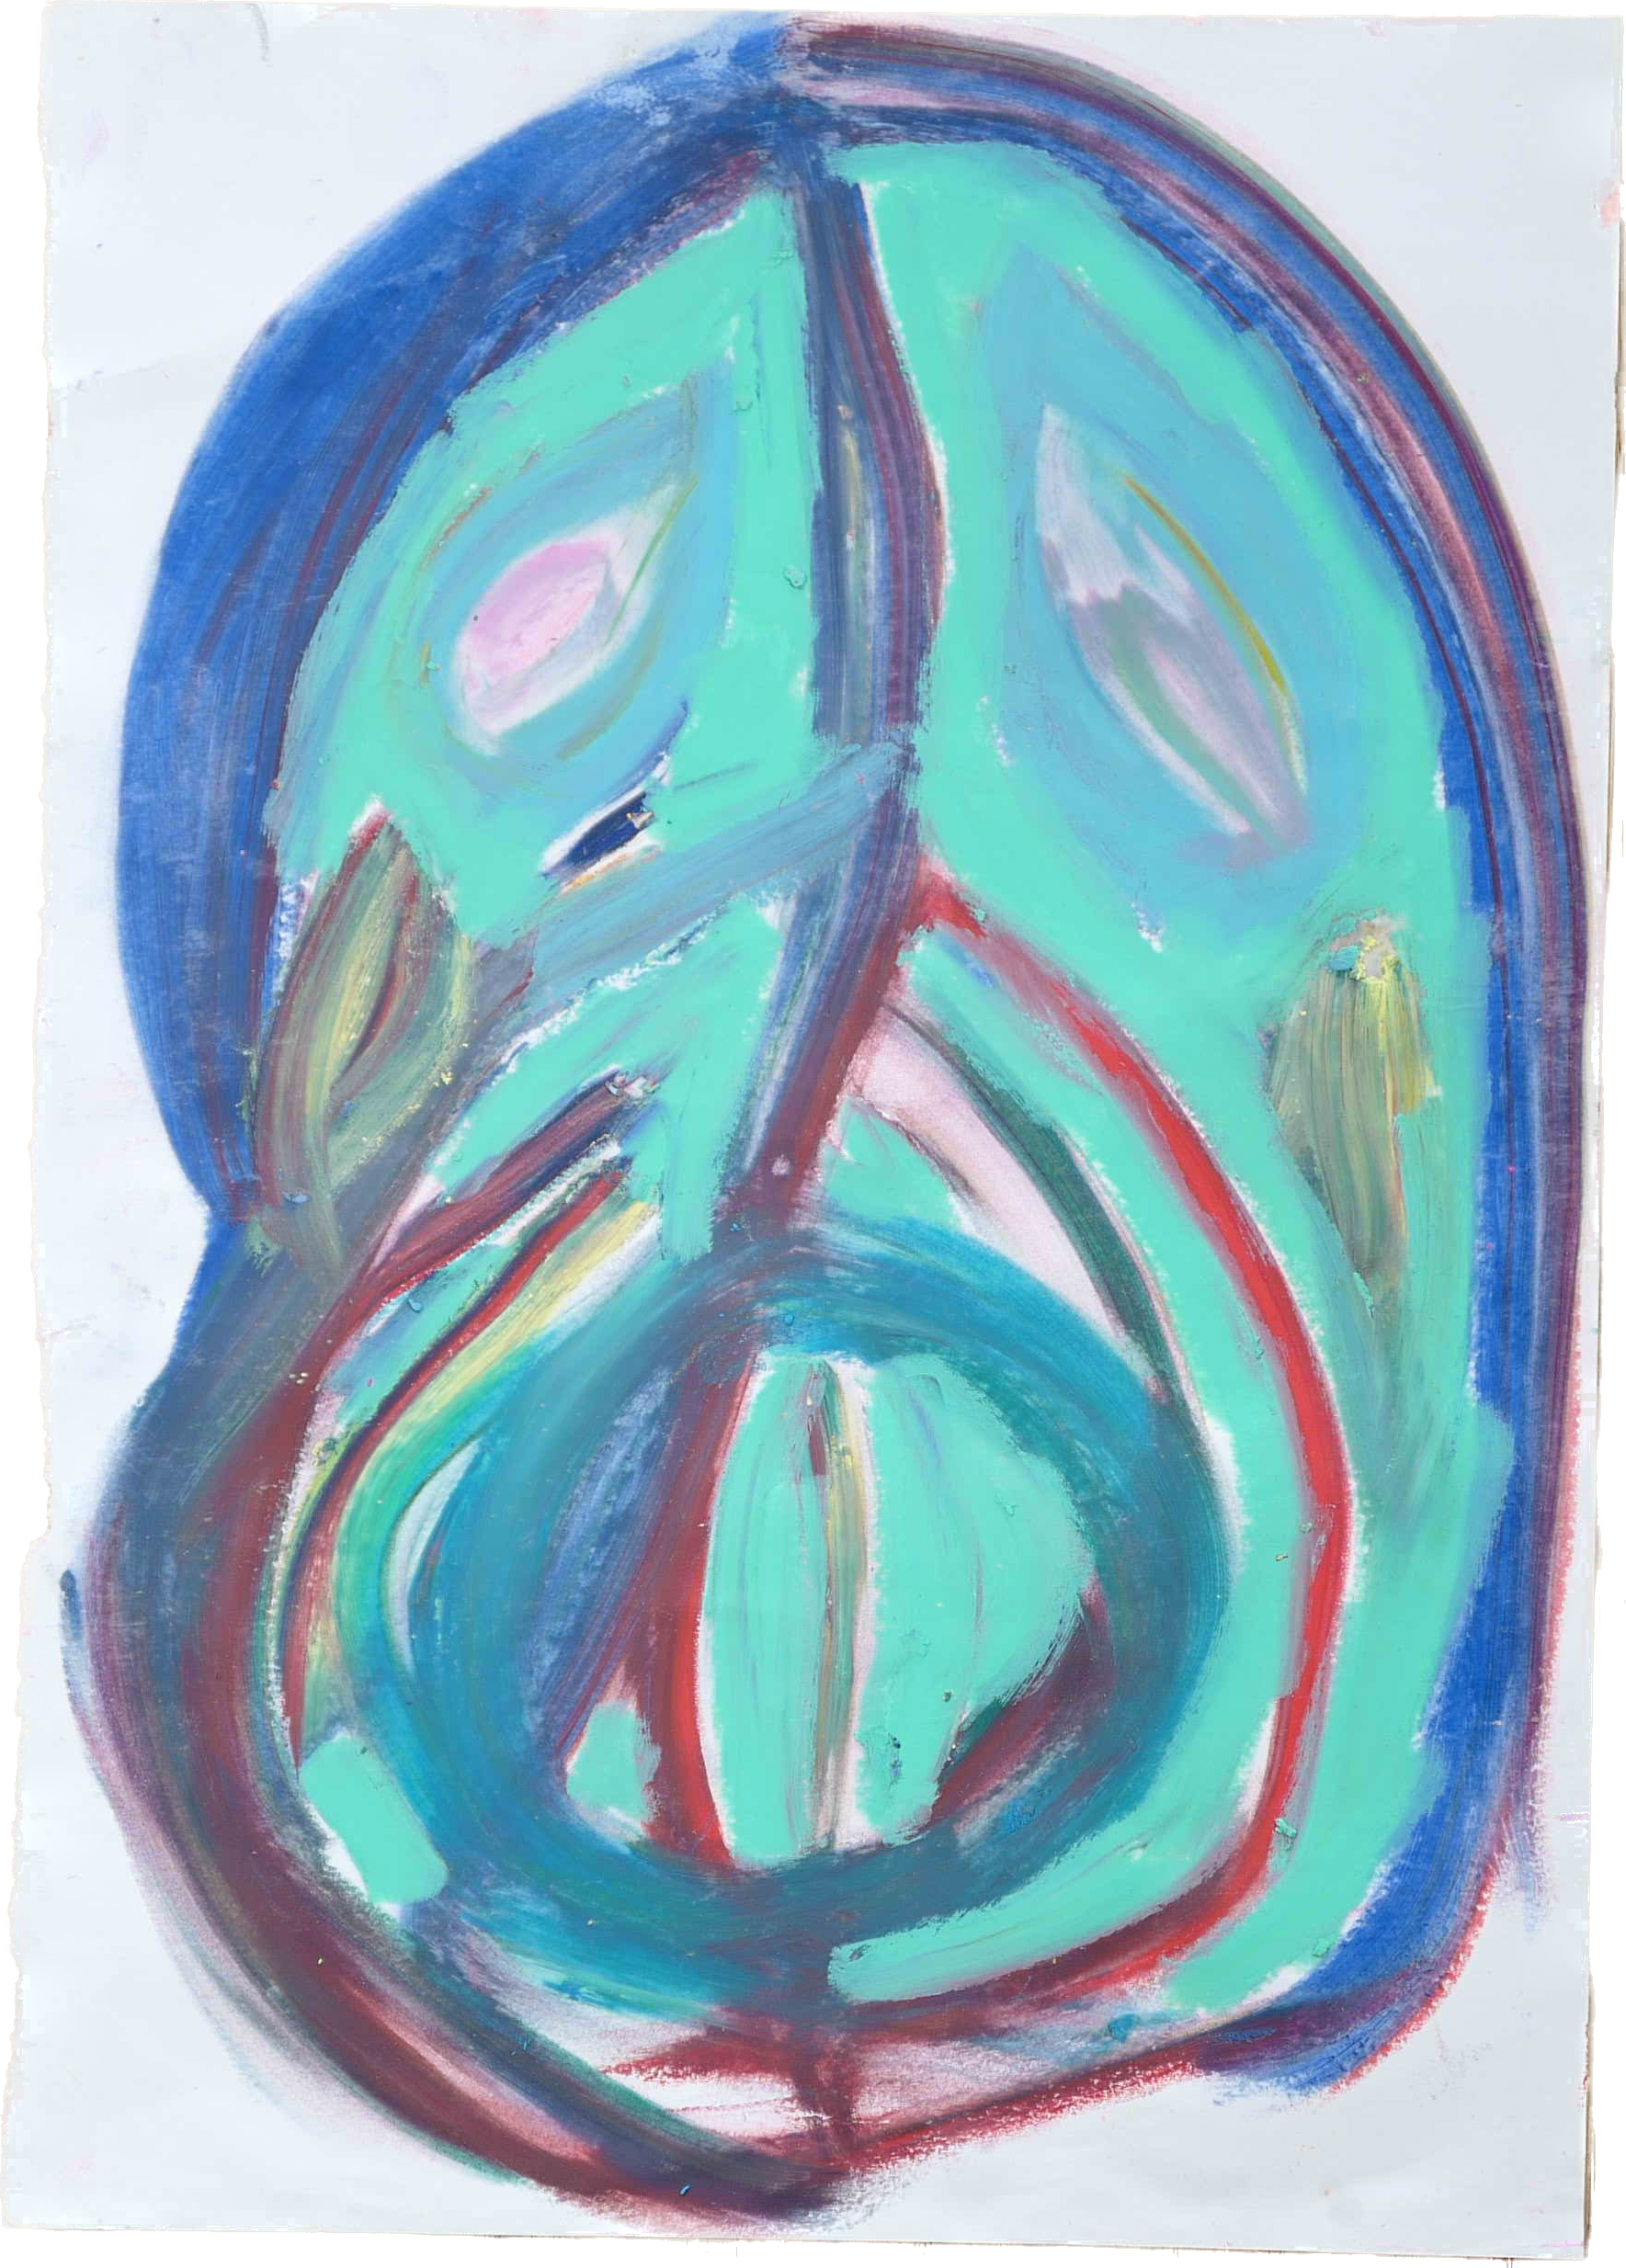 Lenfantvivant chromatic abstract meditation" "Sauna Meditation art piece No. 129" "Harmonious abstract art by Lenfantvivant" "Meditative gestural painting on paper" "Lenfantvivant's emotive color exploration"